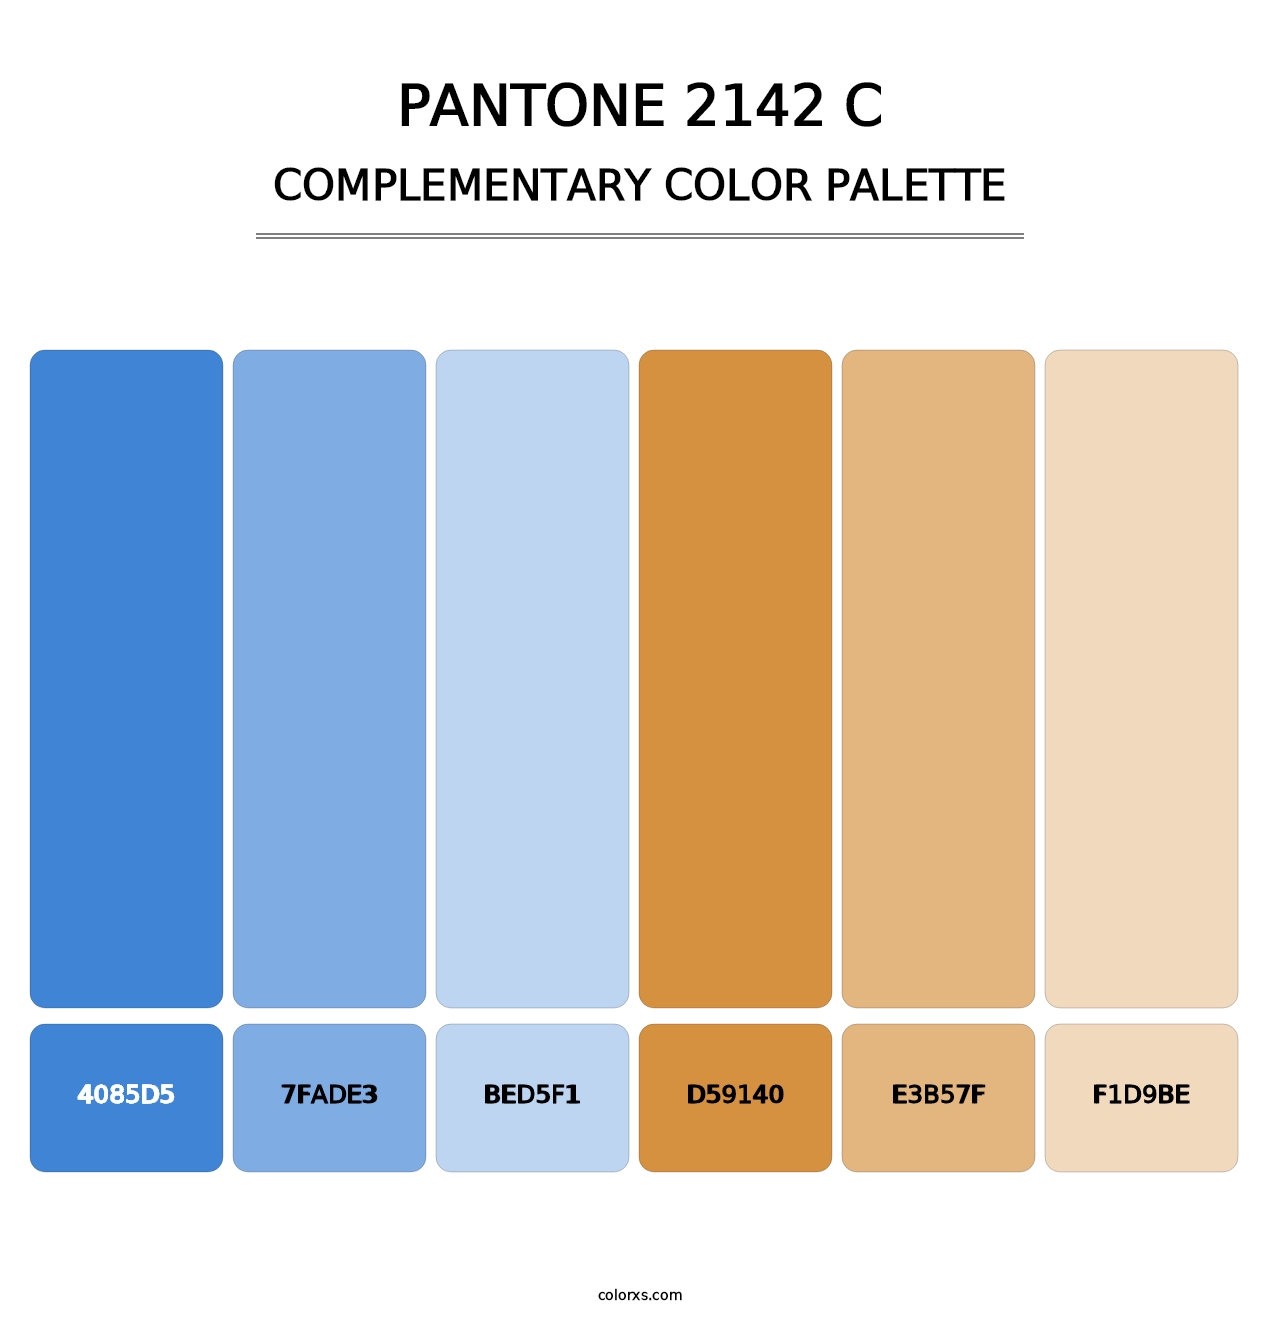 PANTONE 2142 C - Complementary Color Palette